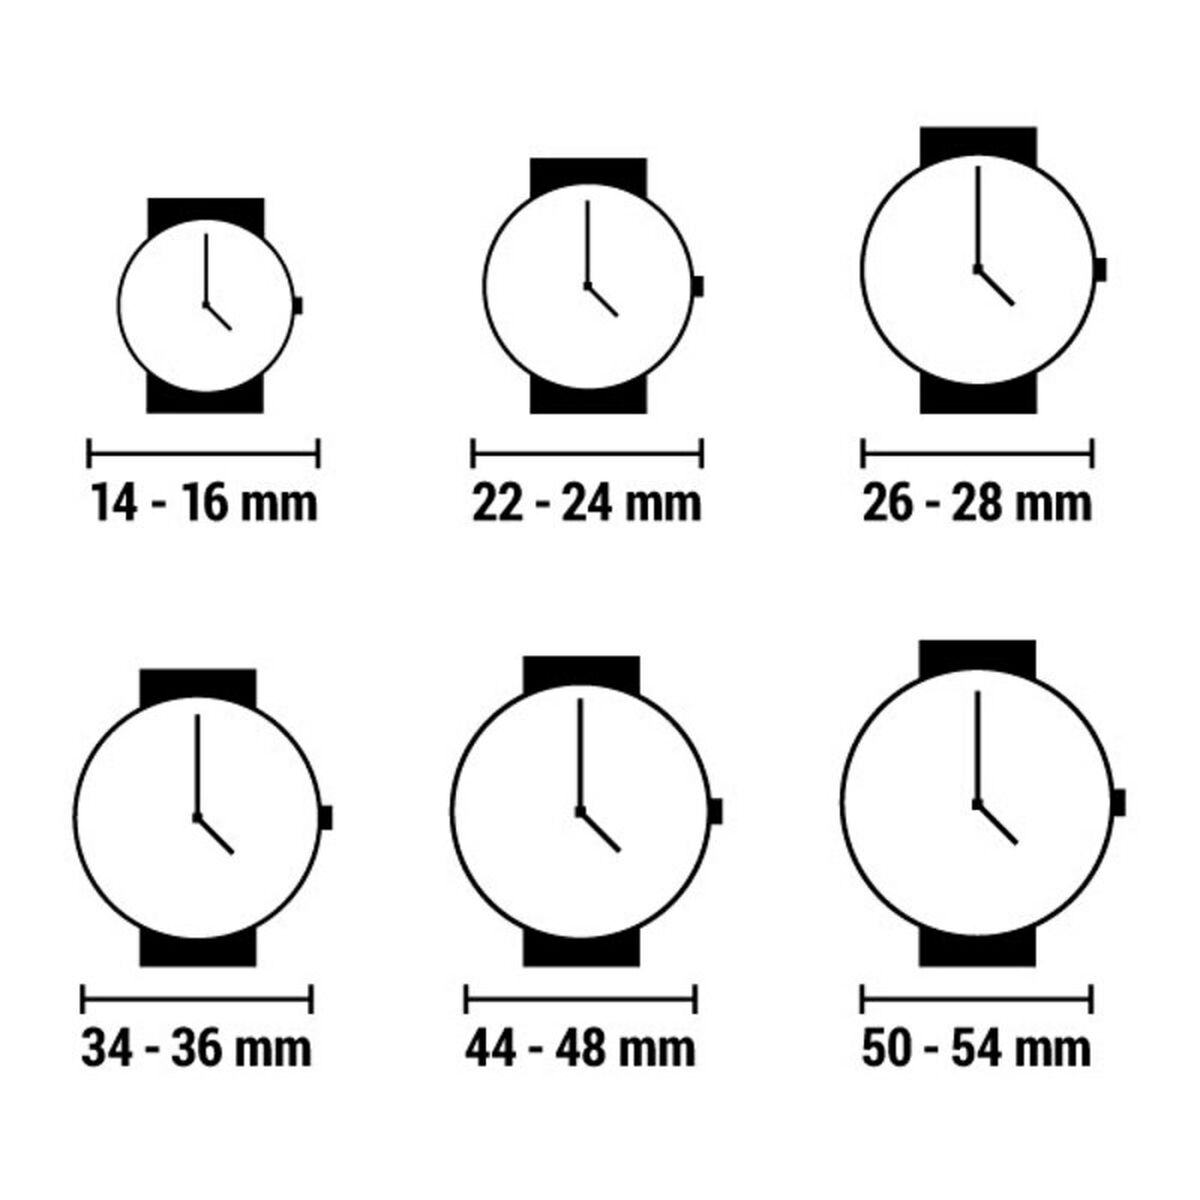 Horloge Dames Laura Biagiotti LB0002L-07Z (Ø 33 mm)